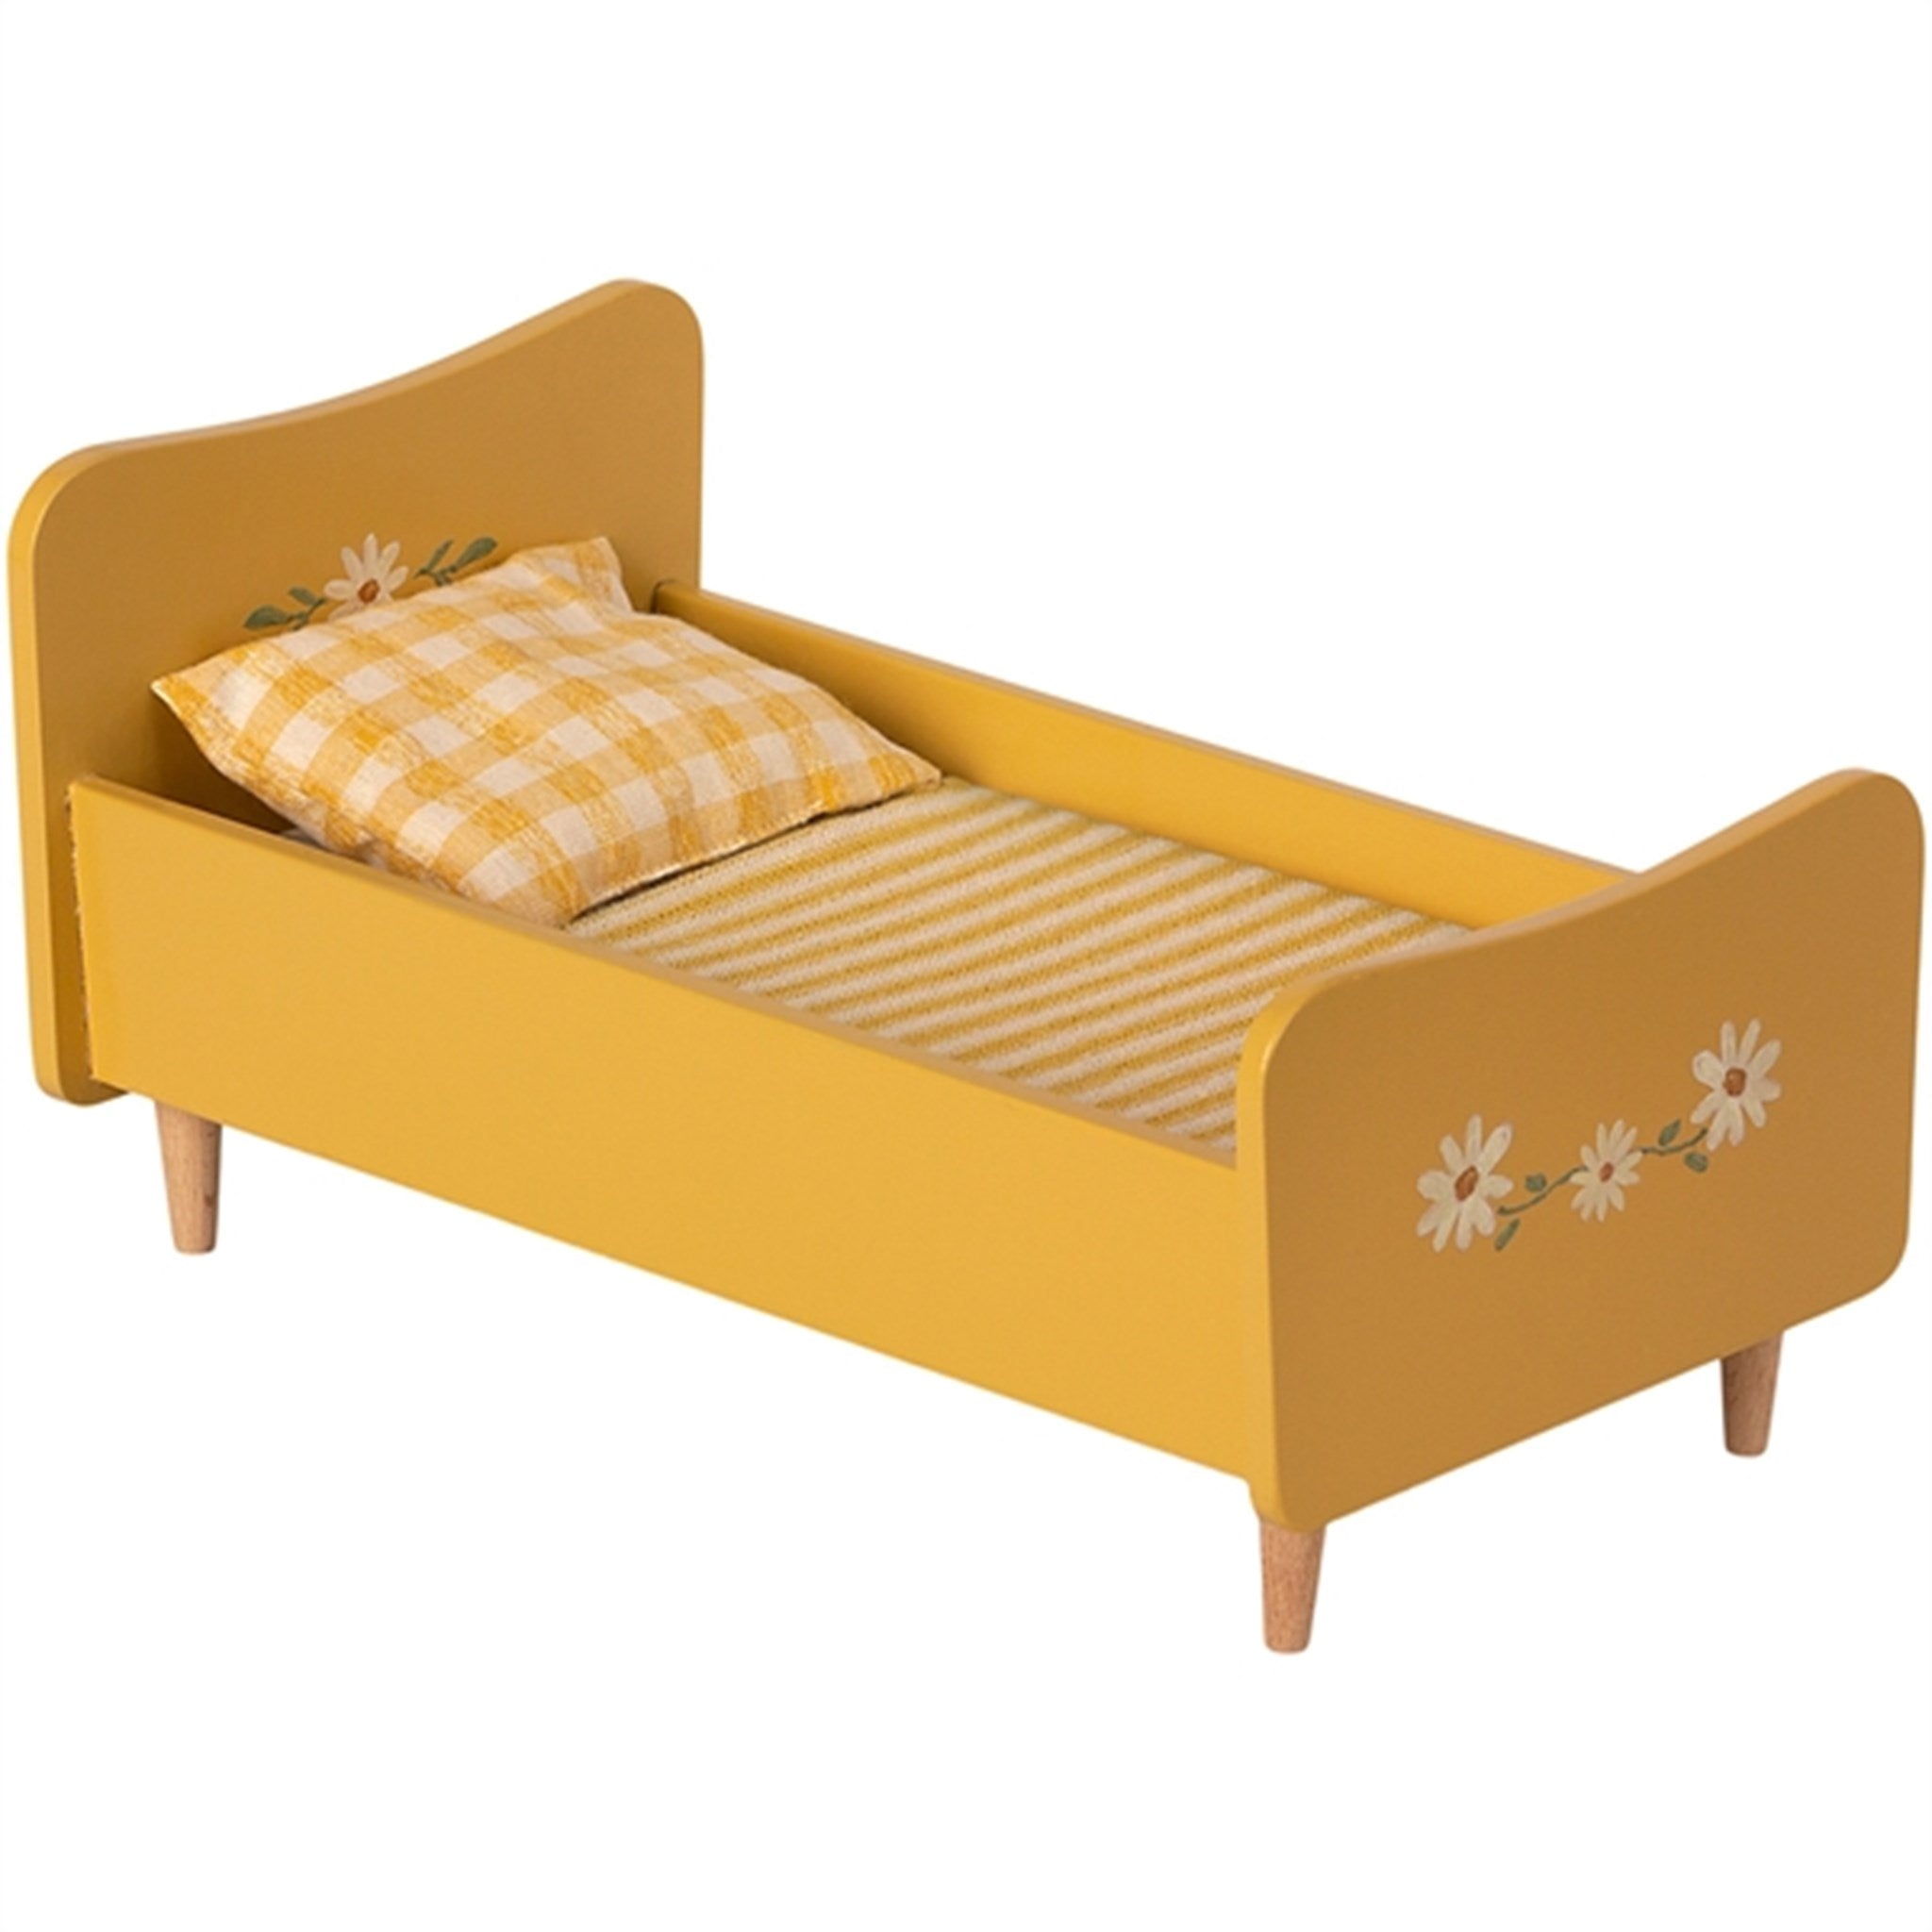 Maileg Wooden Bed Mini Yellow